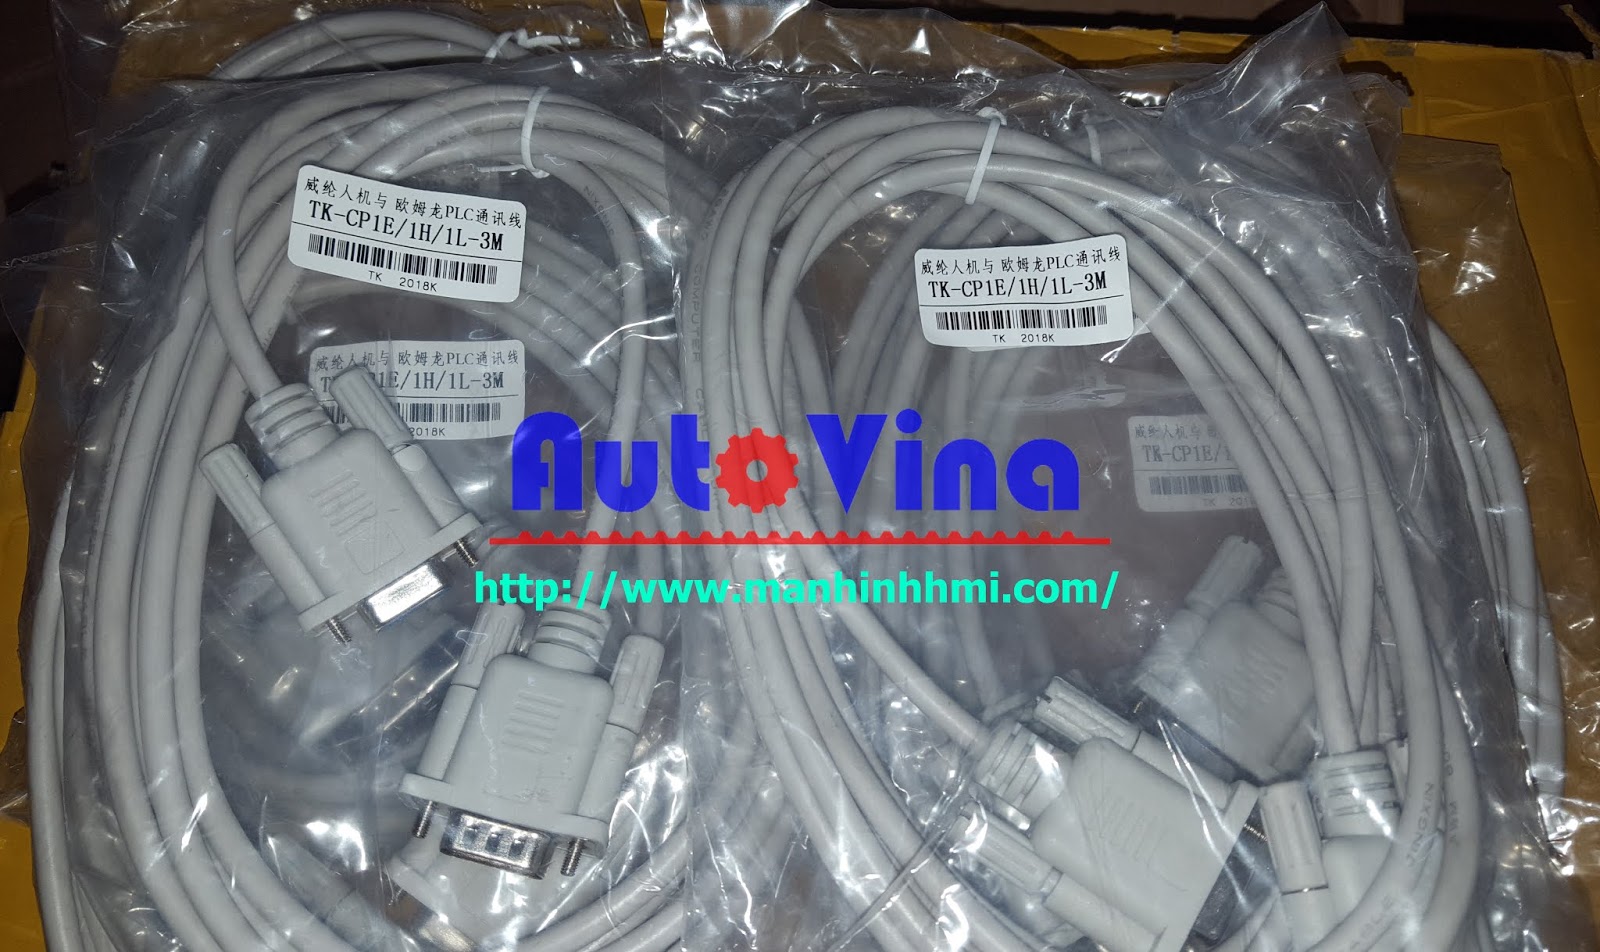 Bán Cable kết nối HMI Weinview TK với PLC Omron CP1E, CP1H, CP1L